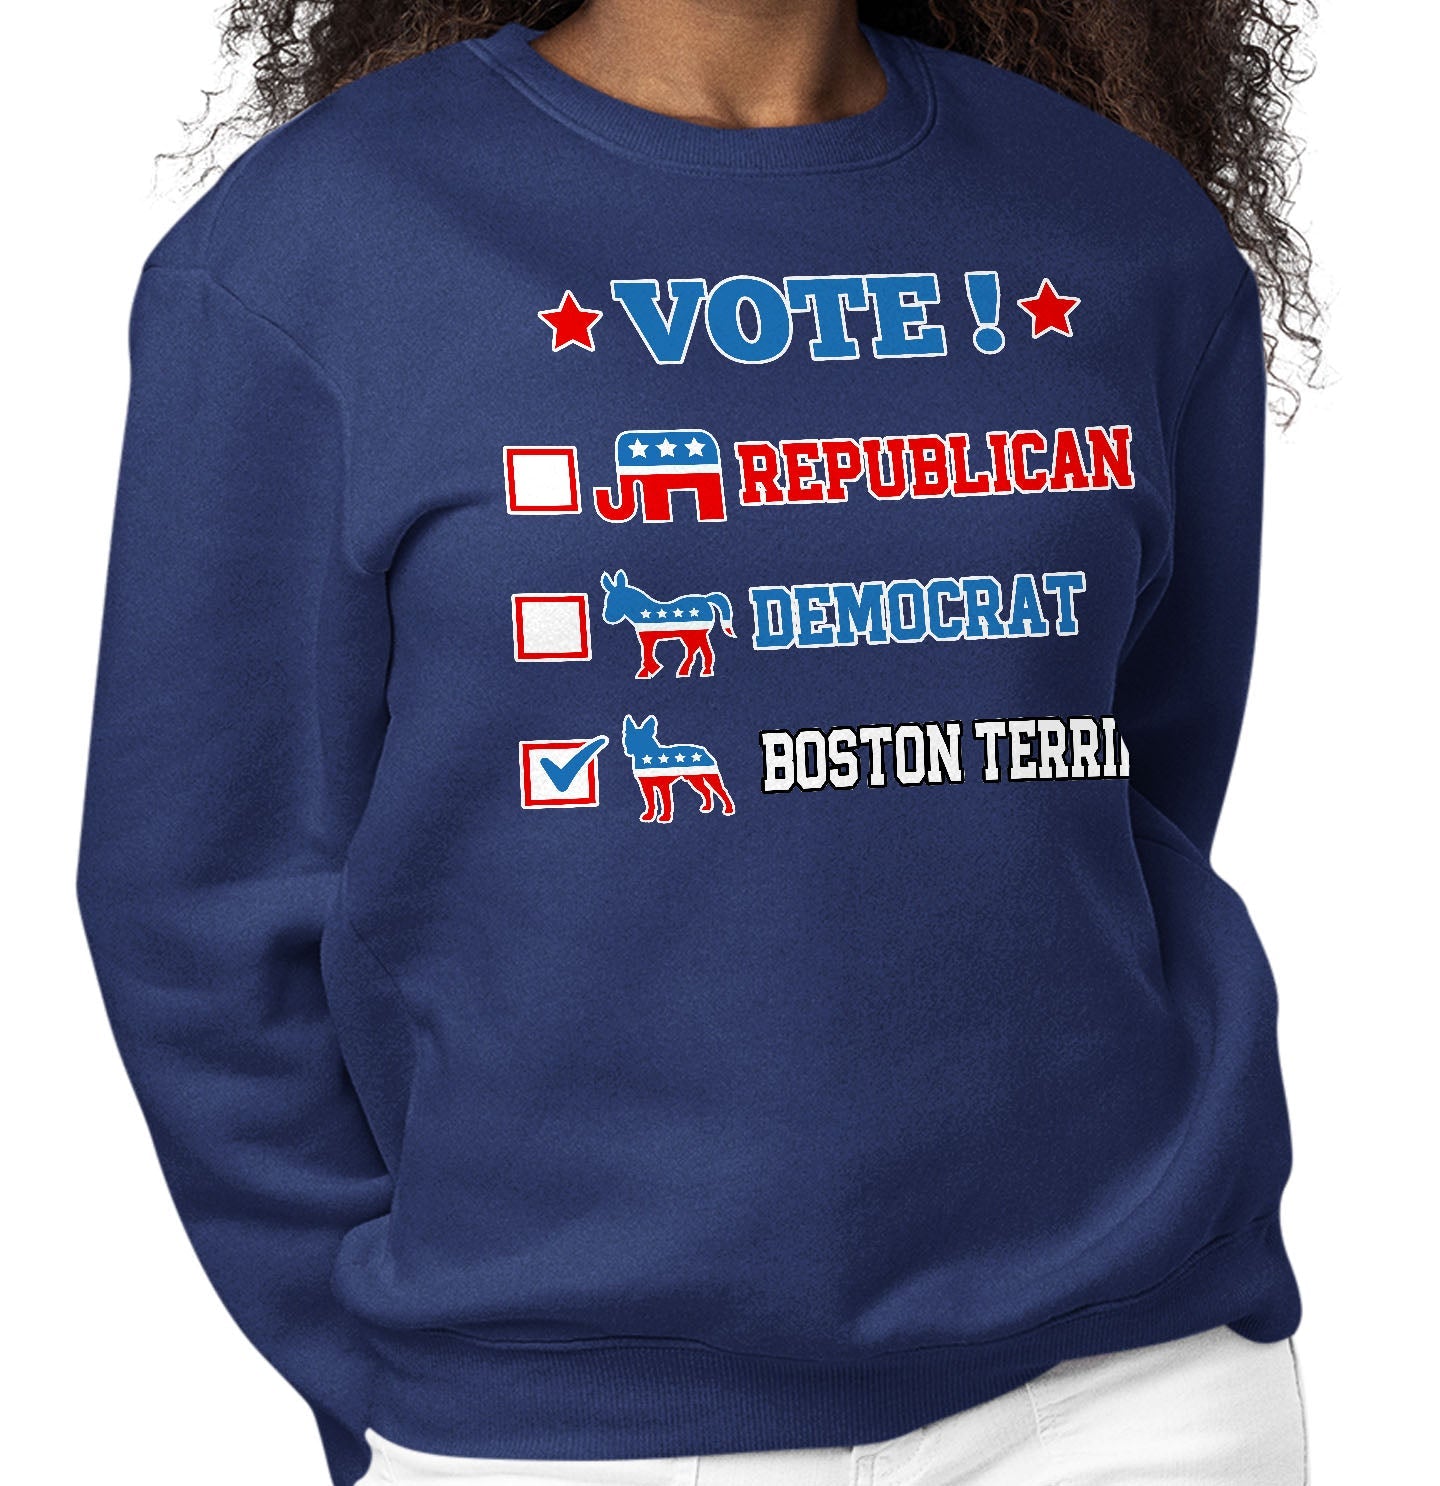 Vote for the Boston Terrier - Adult Unisex Crewneck Sweatshirt